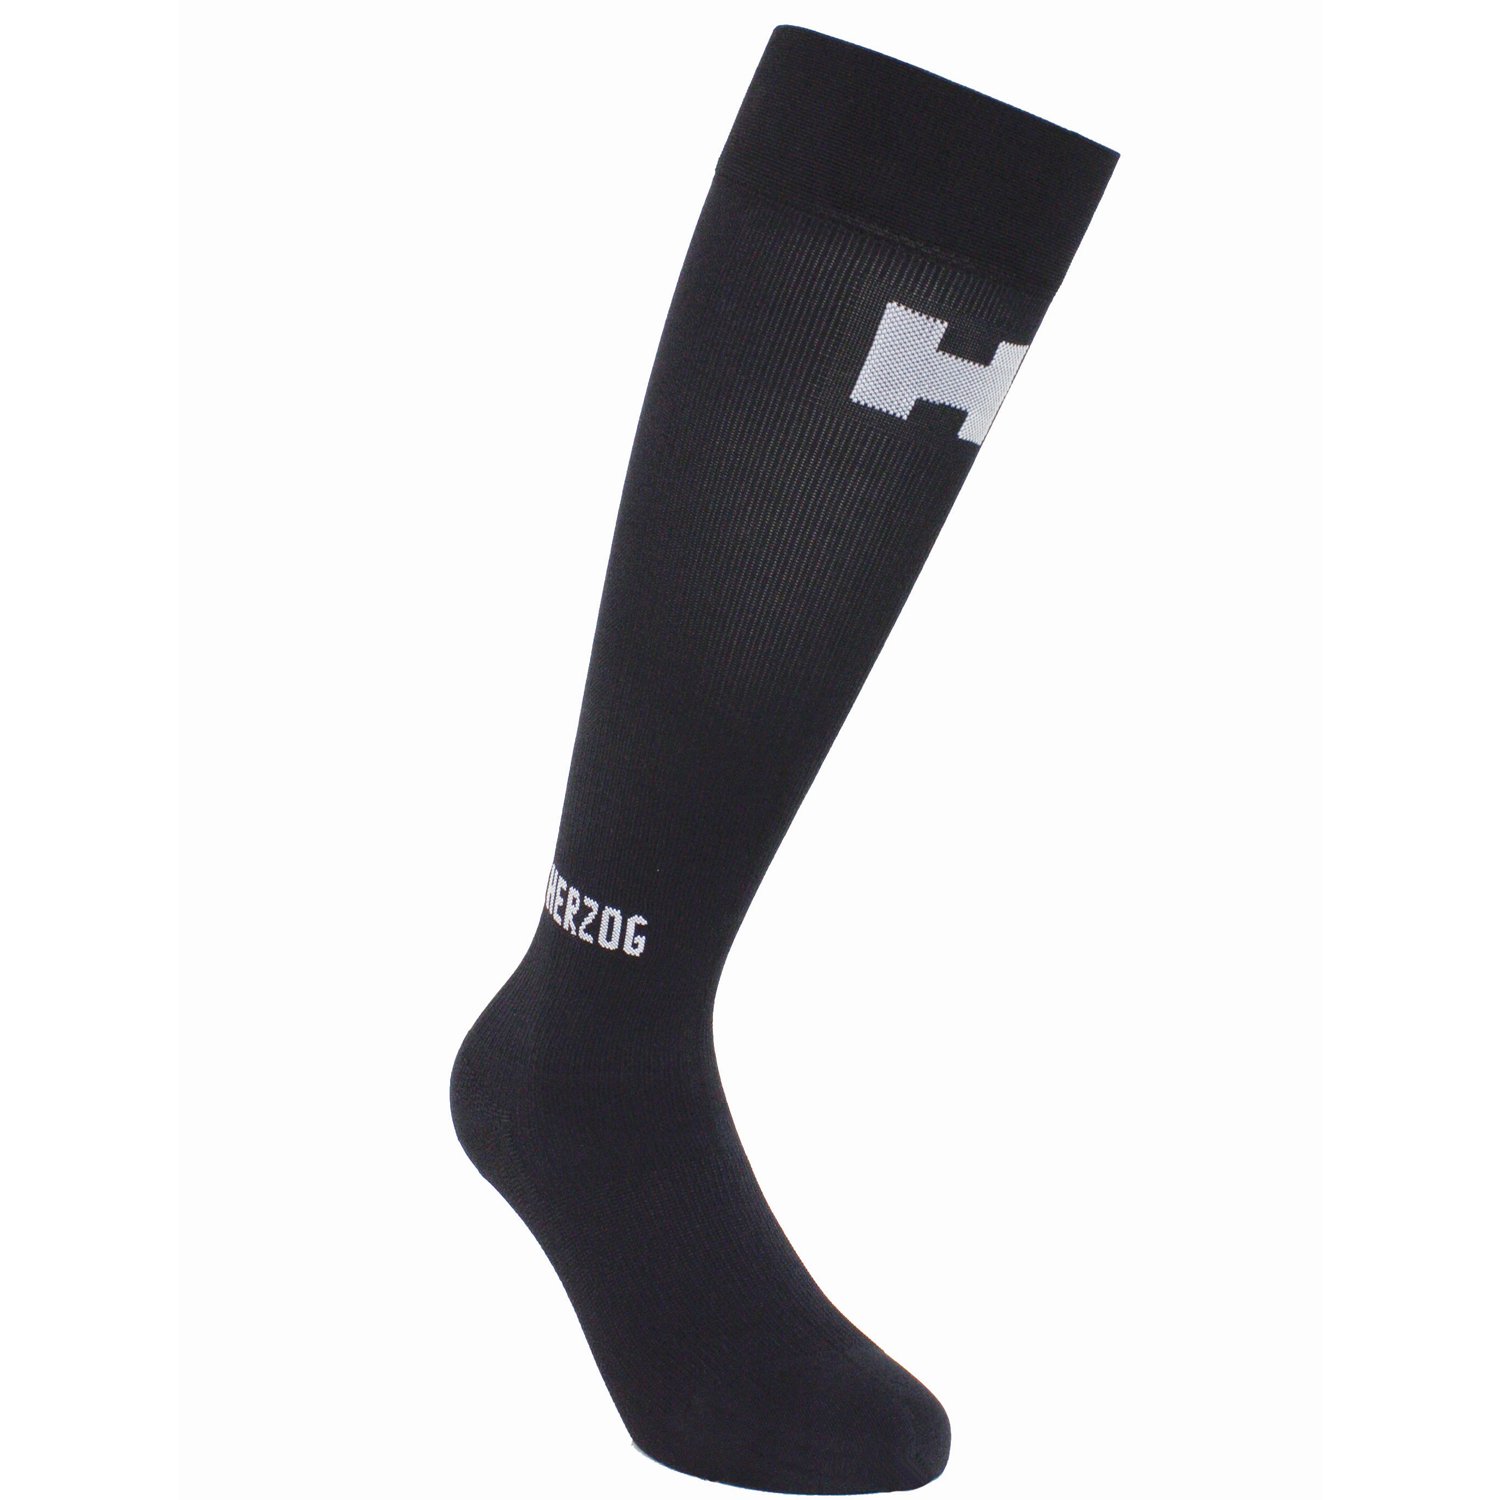 herzog sport compression stockings running stockings pro